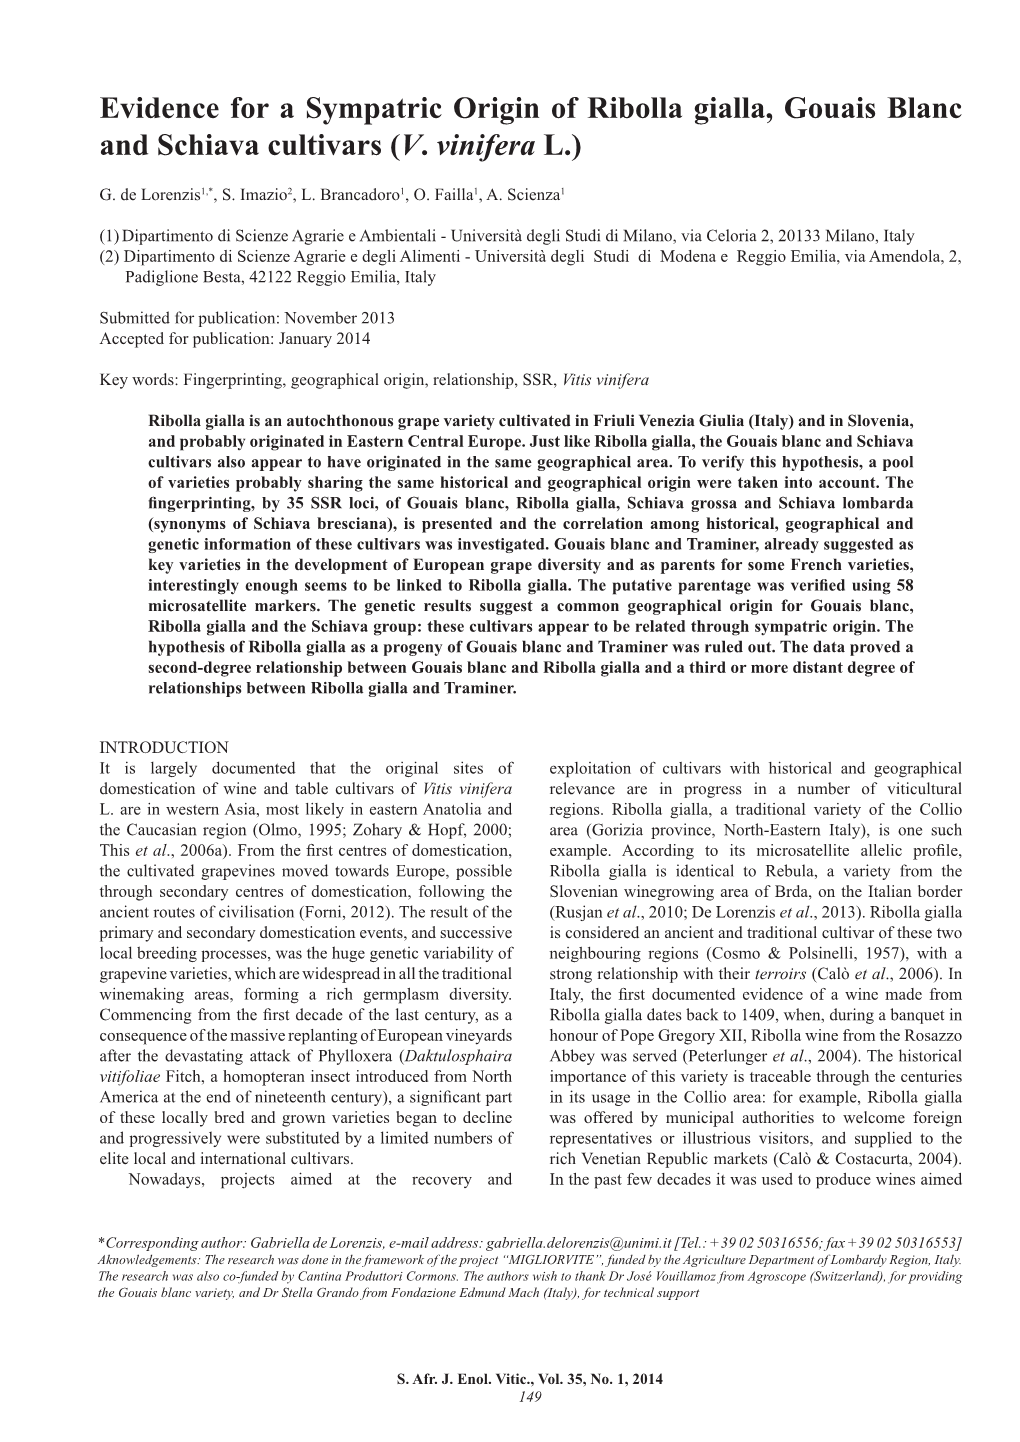 Evidence for a Sympatric Origin of Ribolla Gialla, Gouais Blanc and Schiava Cultivars (V